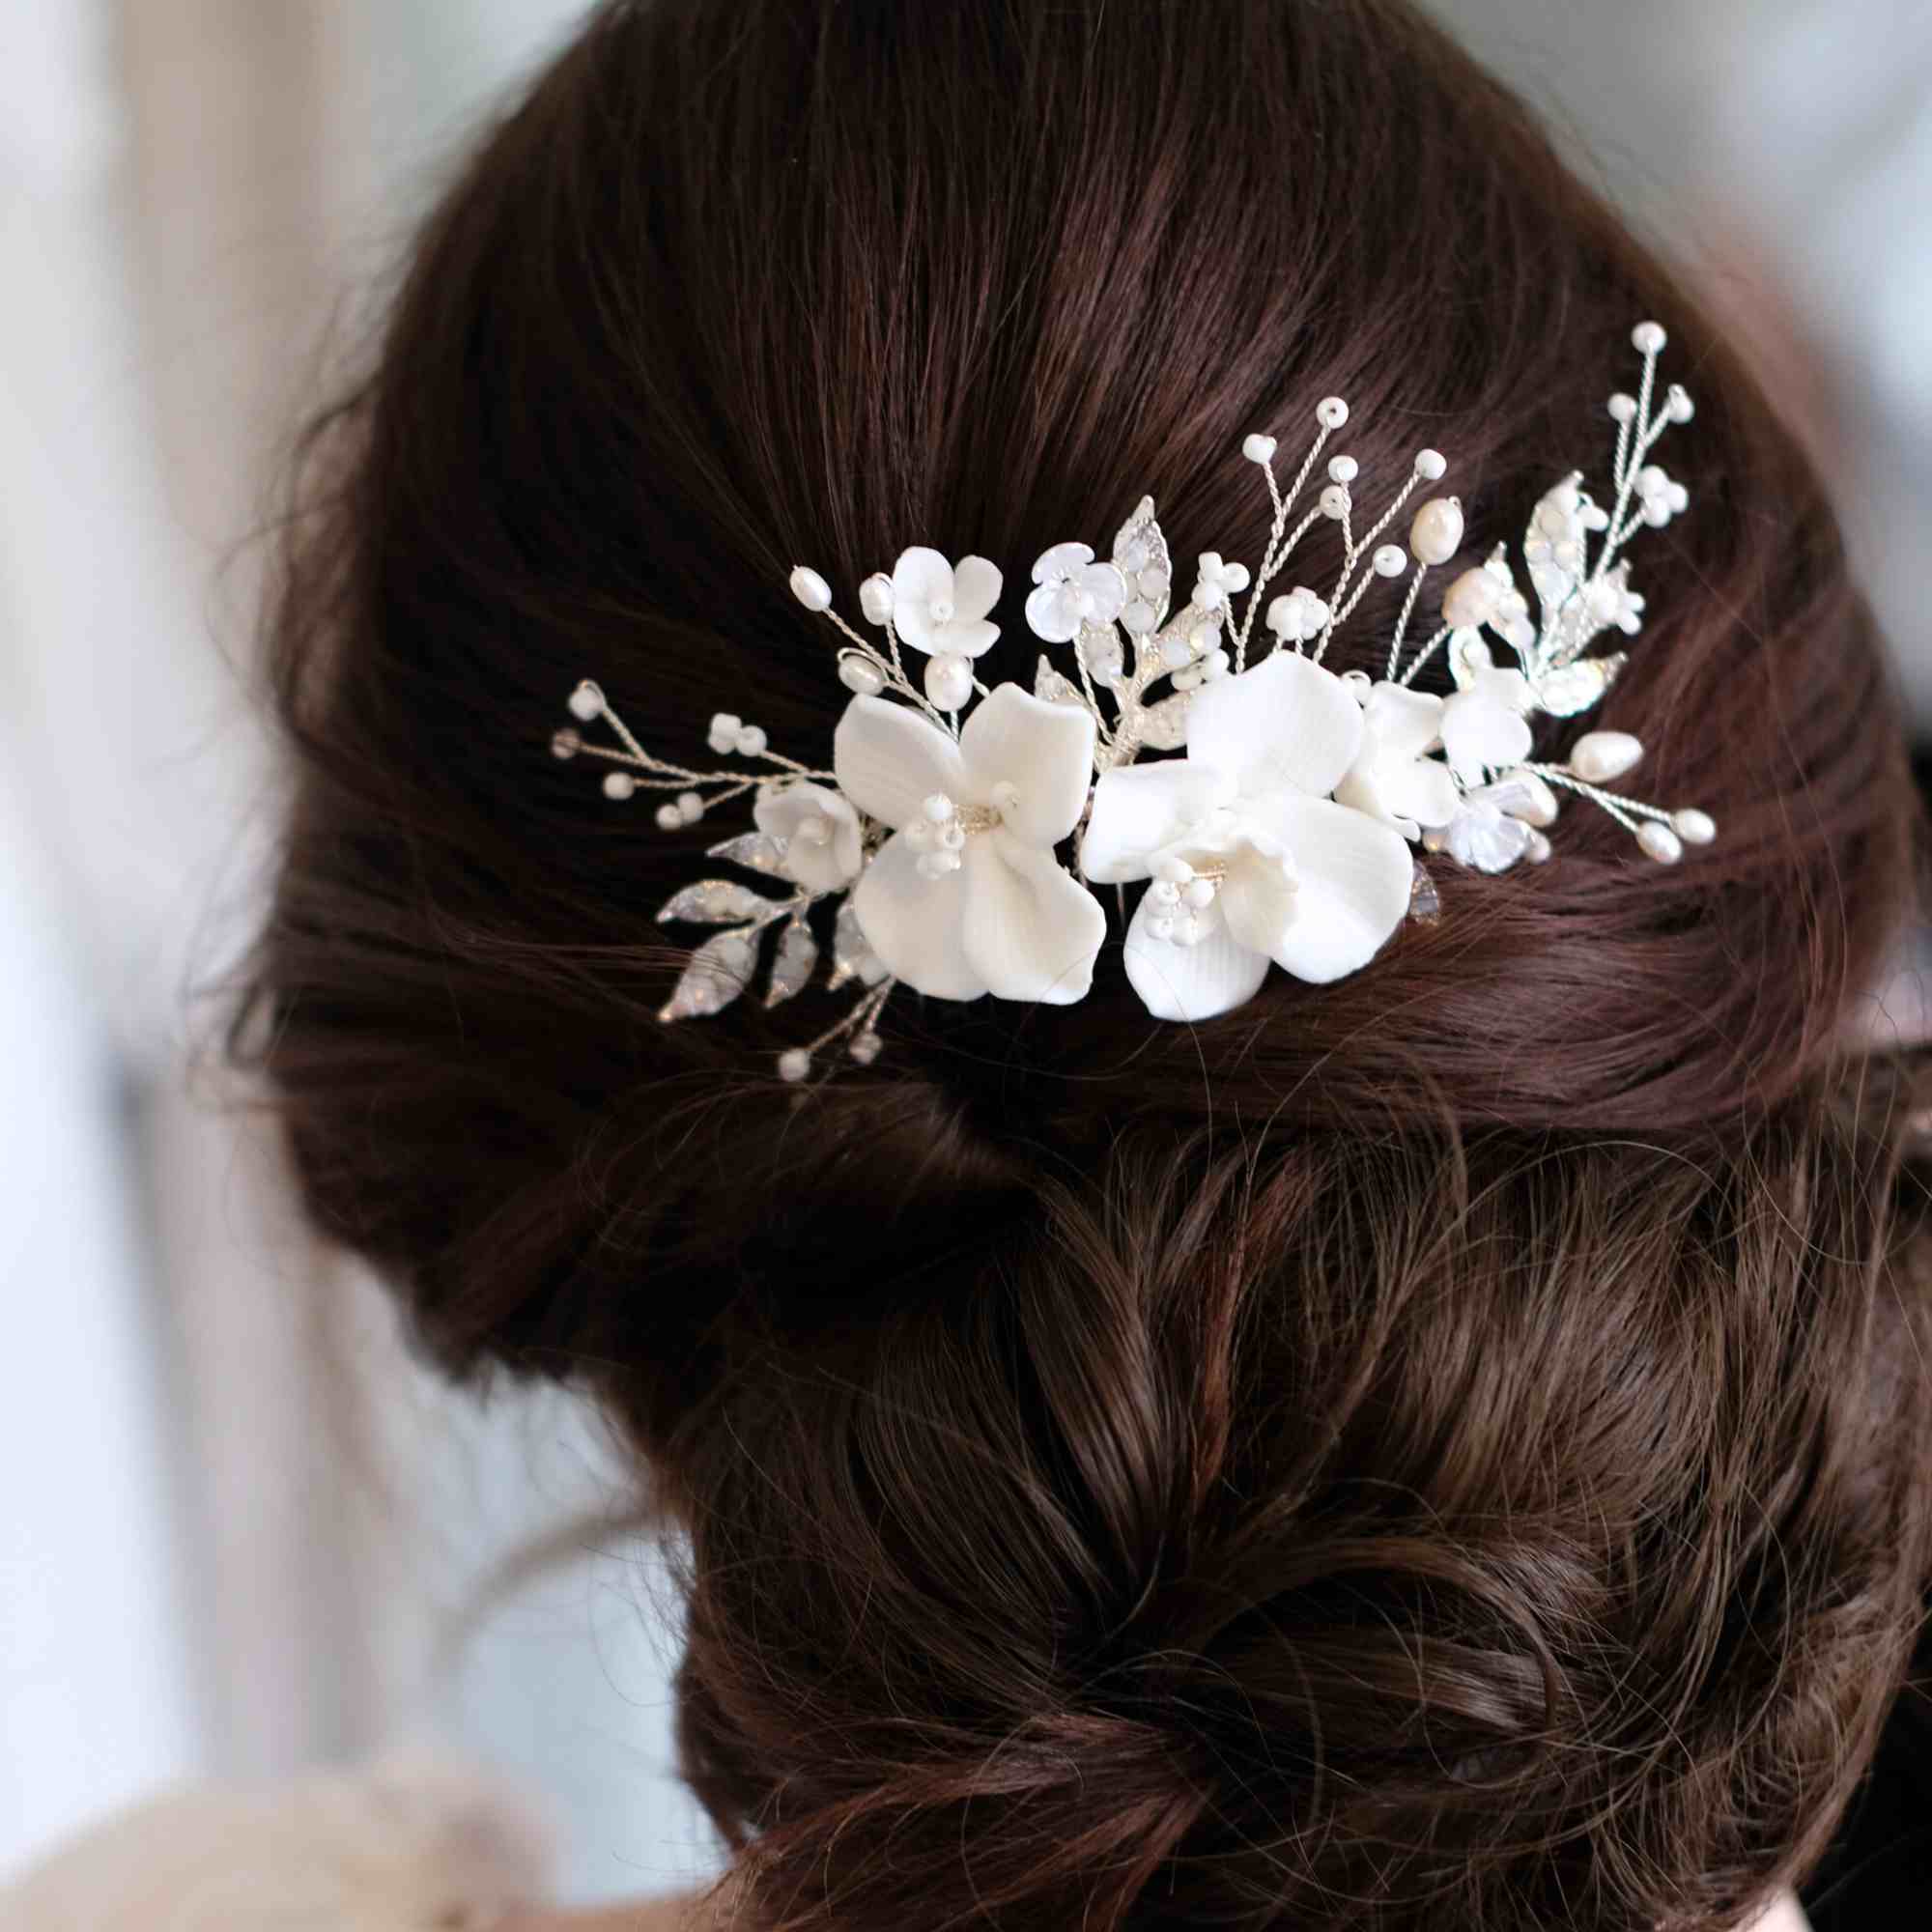 Bridal Hair Jewelry, Hair Comb Bridal Wedding Hair Accessories - Ceramic Flowers BOHO - High Quality Bridal Hair Jewelry by Bridal Jewelry Vumari SKU-67, SKU-68.